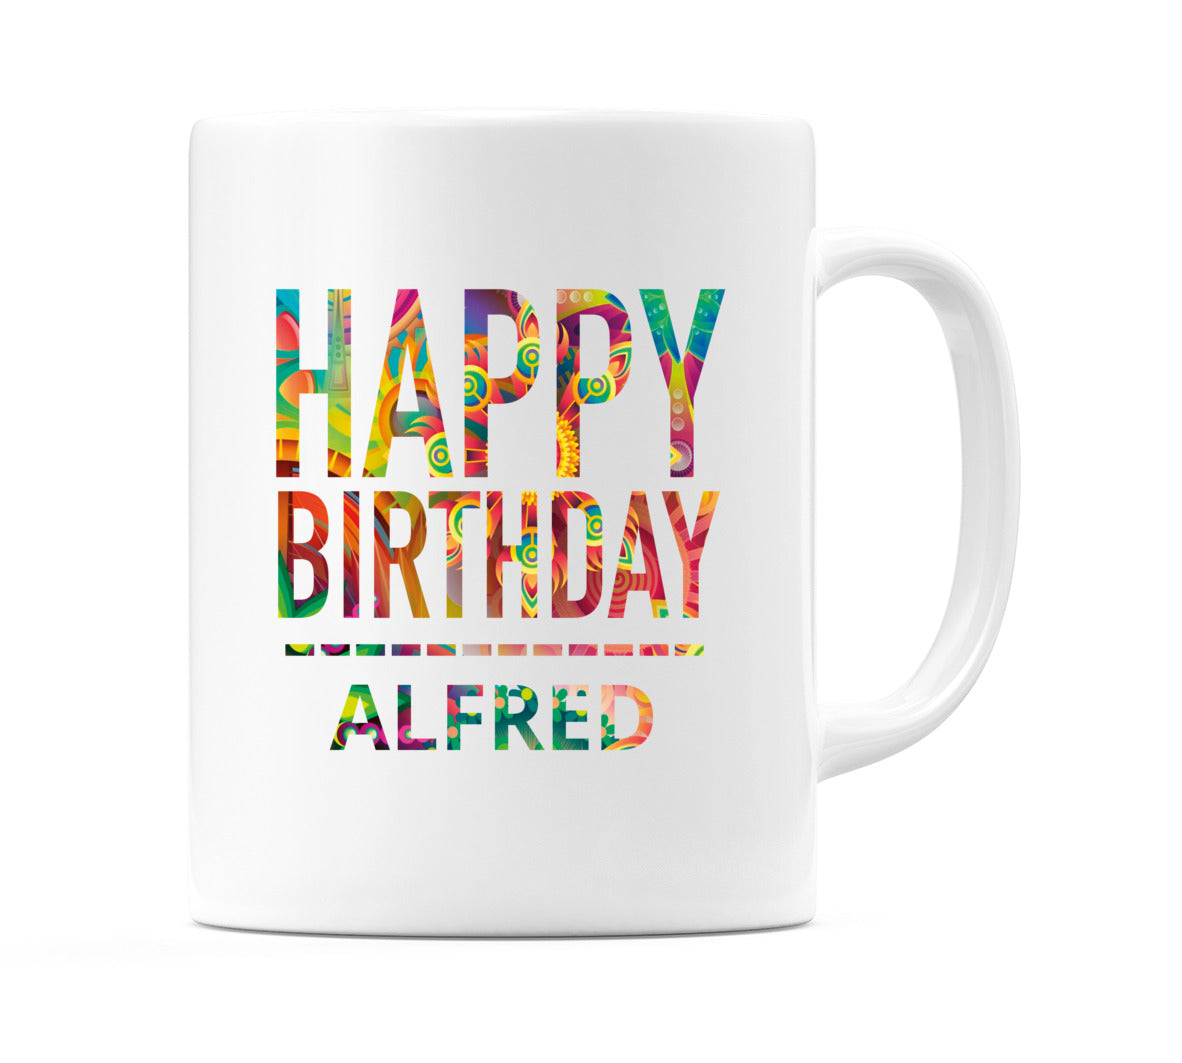 Happy Birthday Alfred (Tie Dye Effect) Mug Cup by WeDoMugs